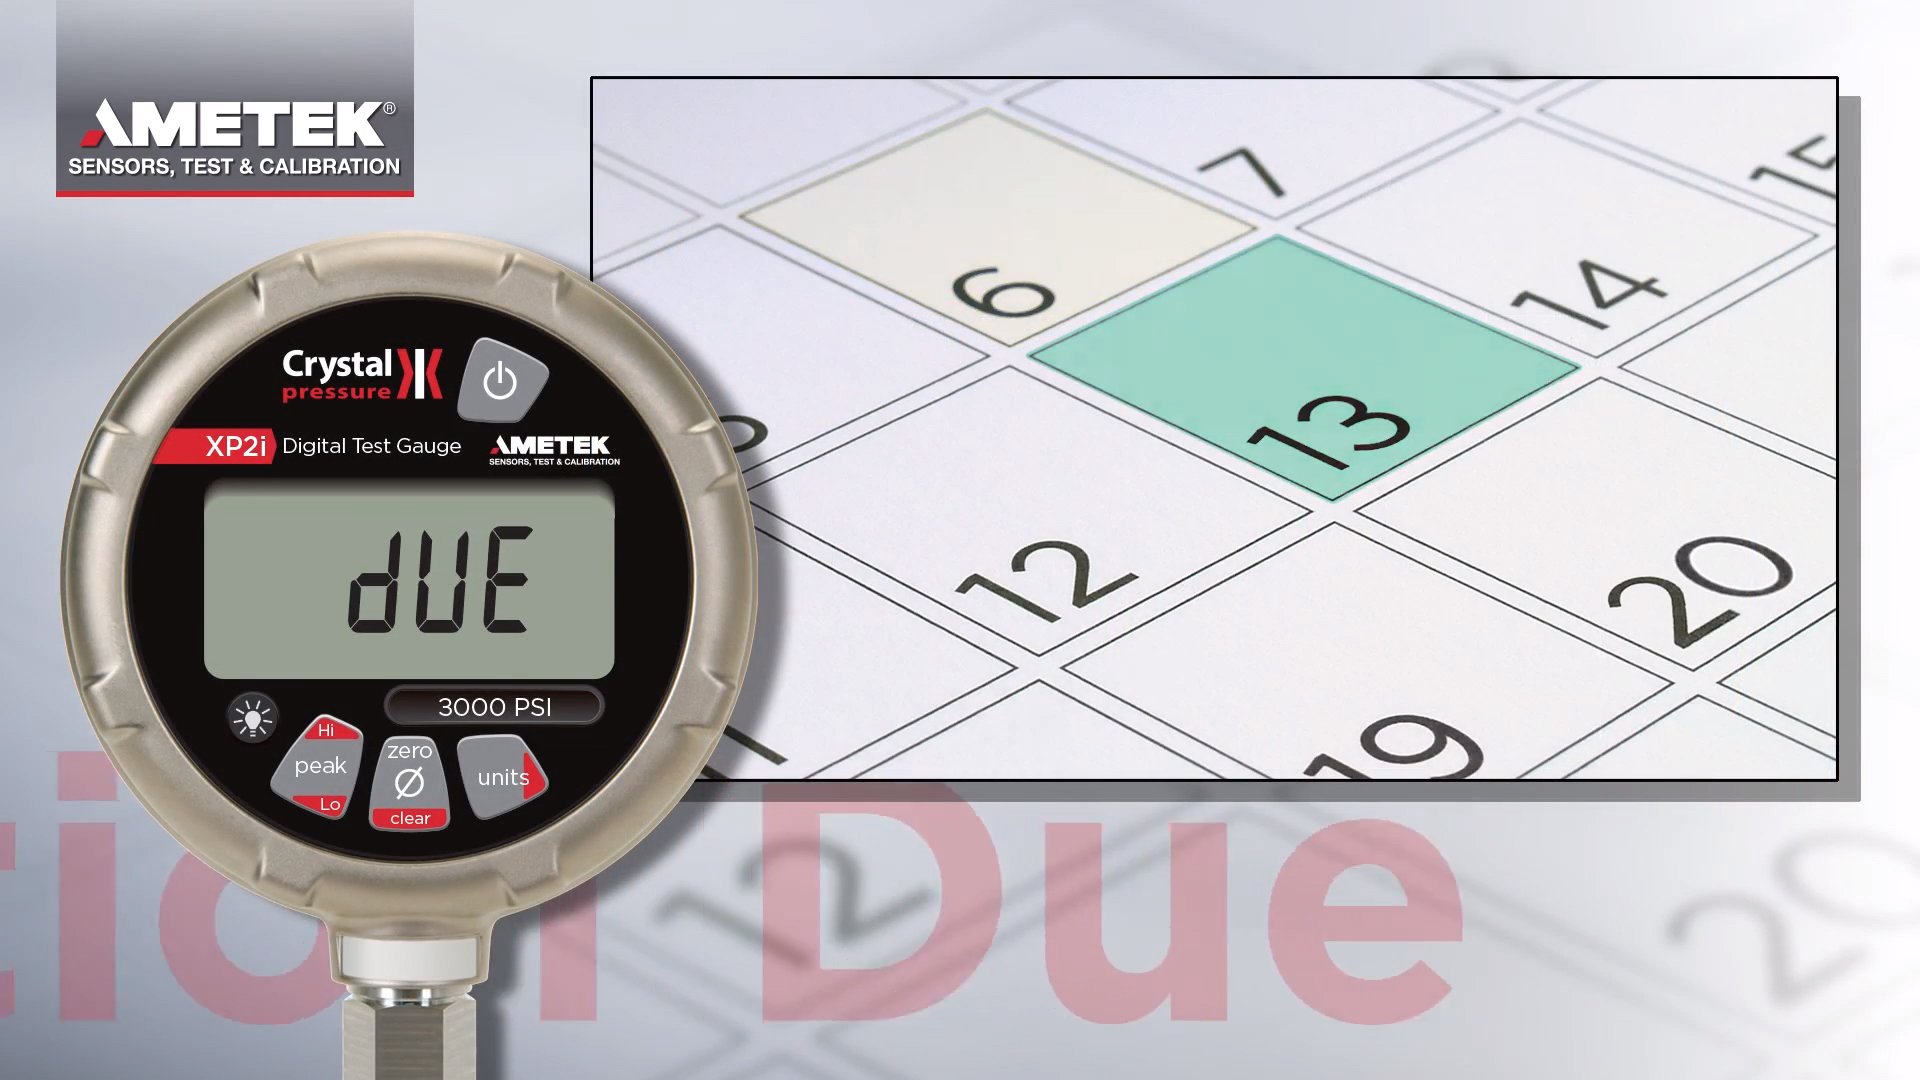 Ametek Crystal XP2i Digital Absolute Pressure Gauge calibration due date warning - reads DUE on the gauge screen.